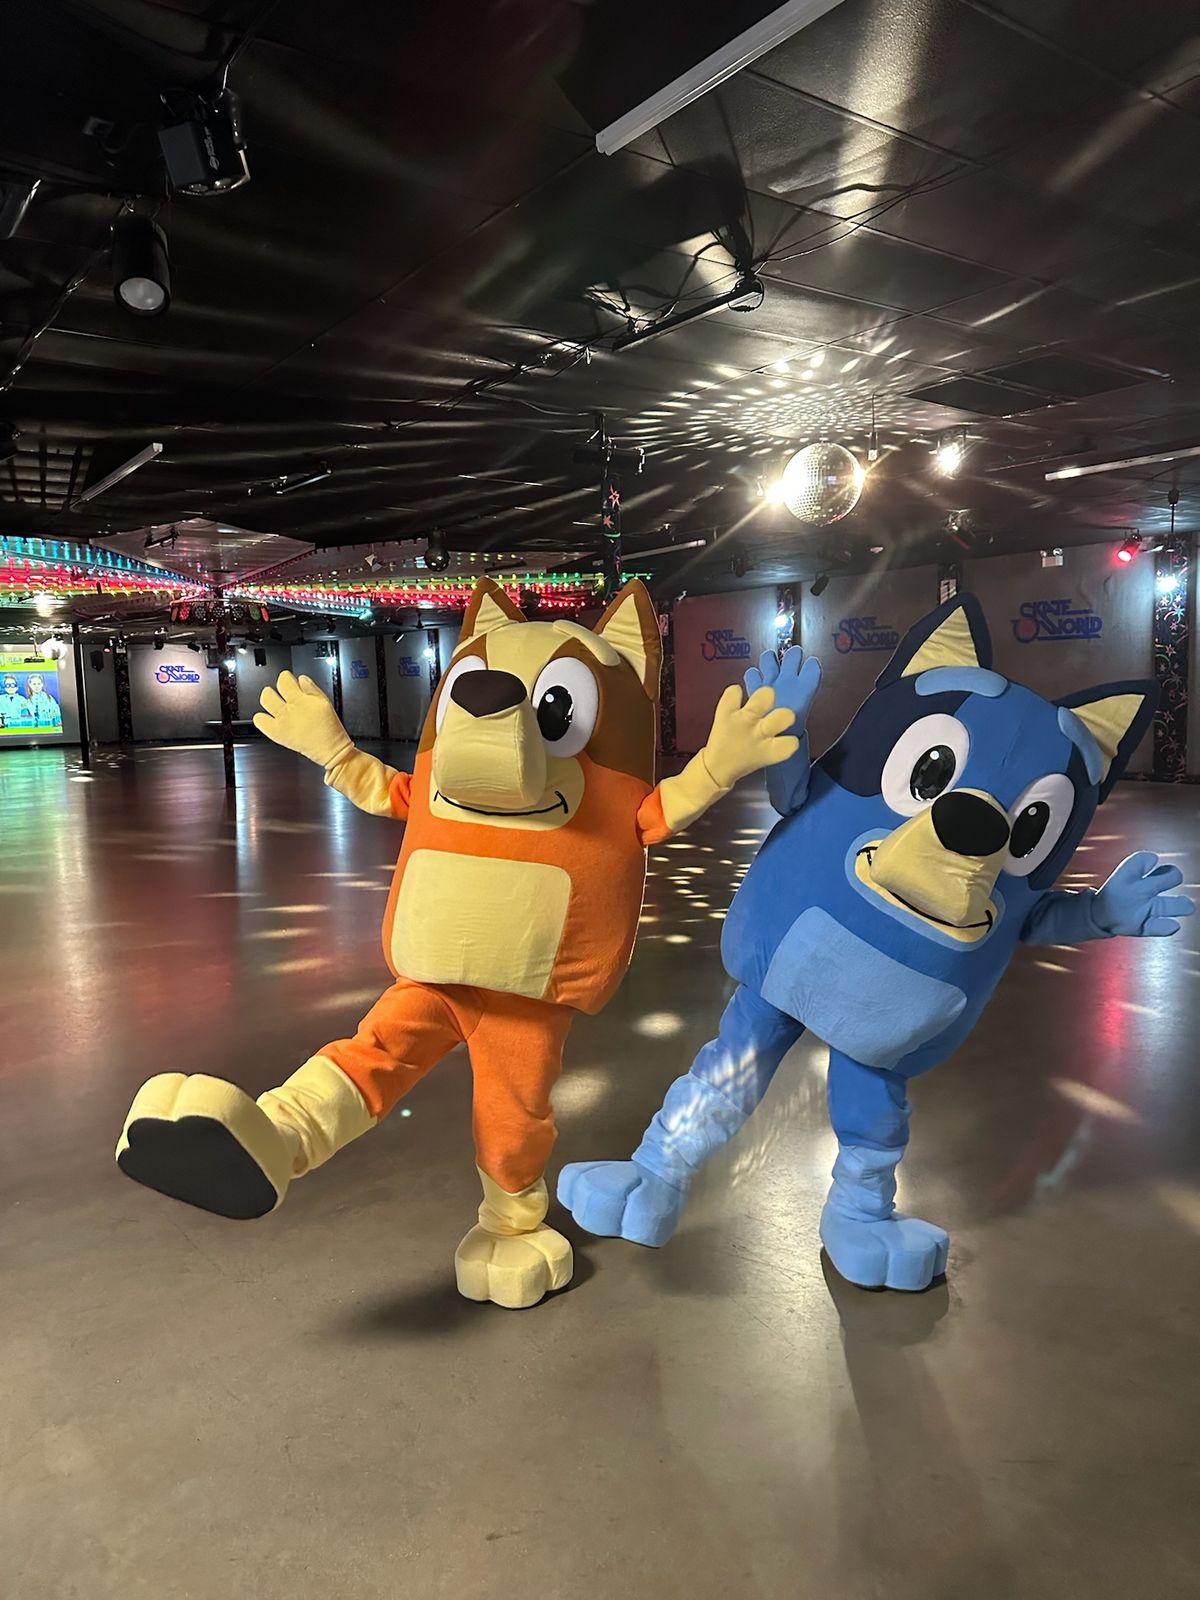 Bluey & Bingo are coming back to Skate World!